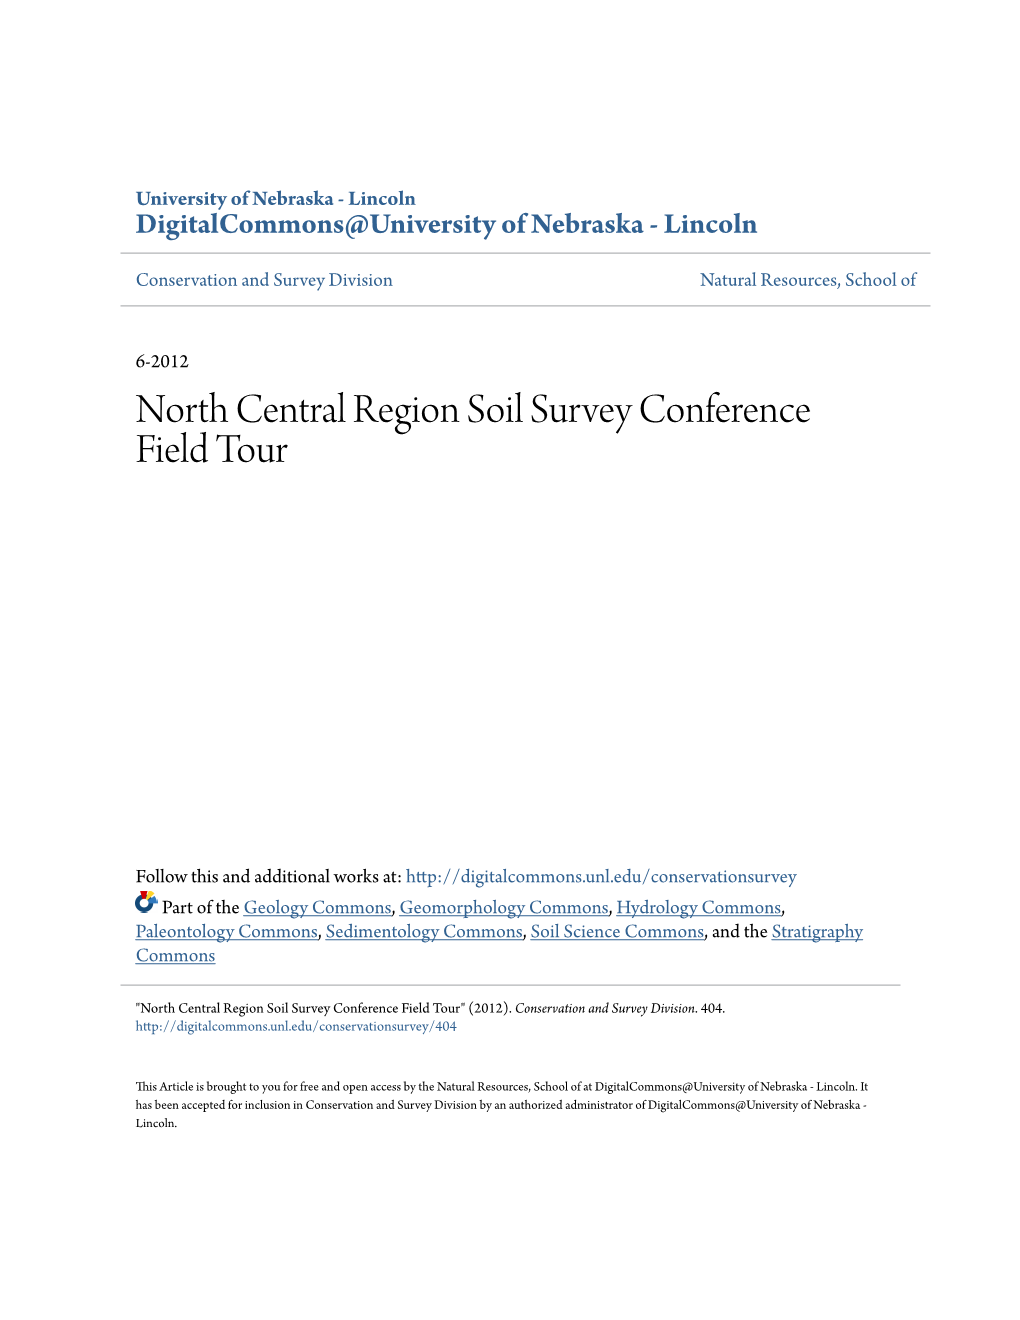 North Central Region Soil Survey Conference Field Tour